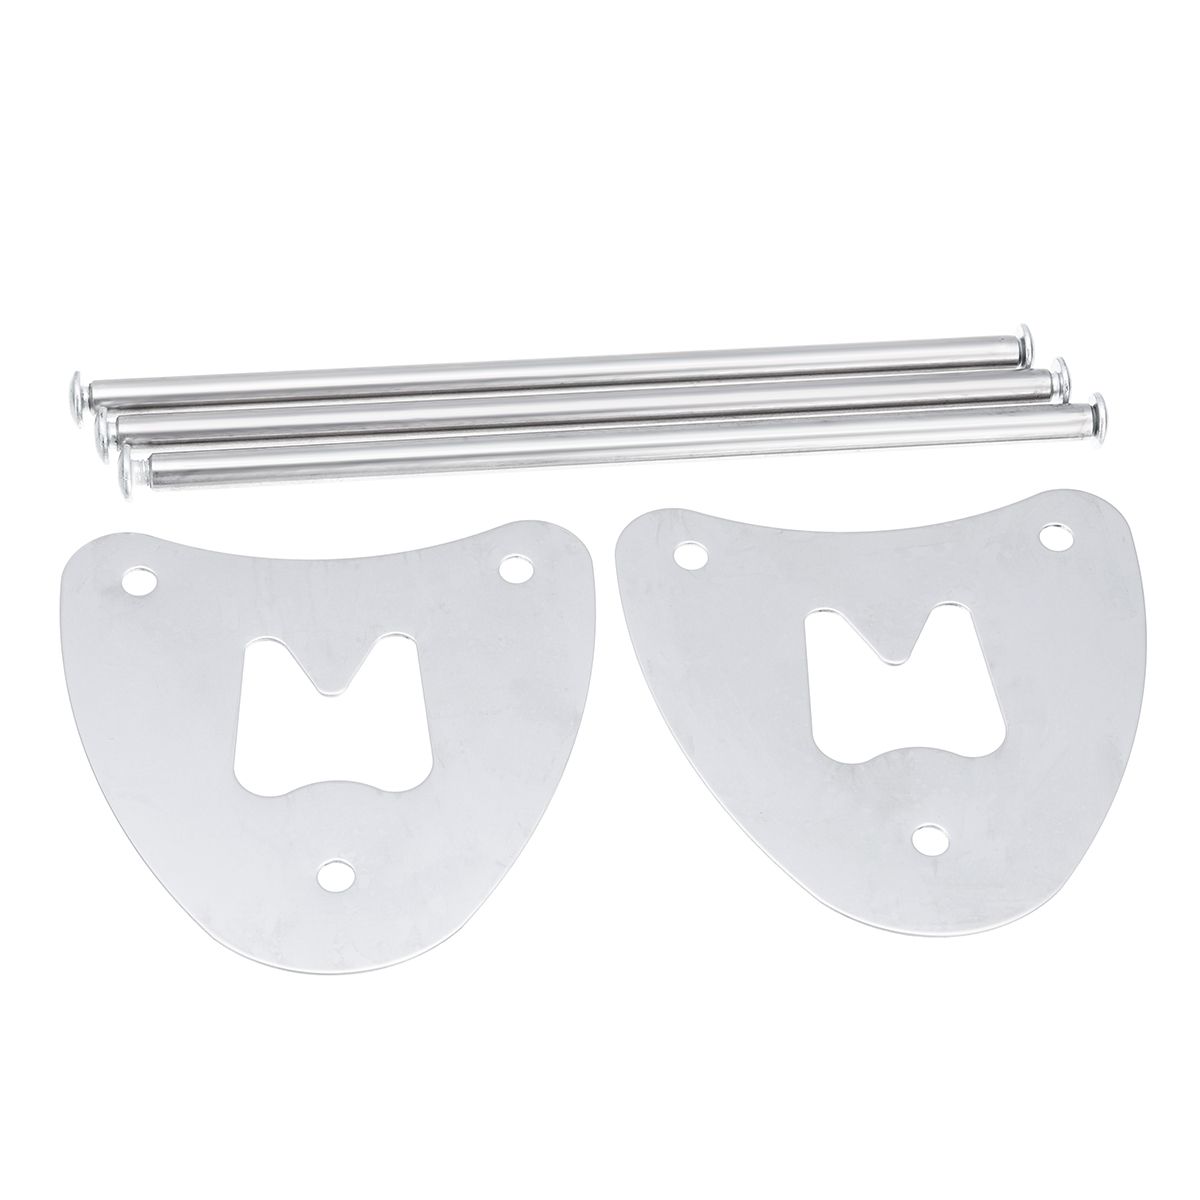 Stainless-Steel-Stand-Holder-Rack-for-Orthodontic-Pliers-Forceps-Scissors-Dental-Tools-1381887